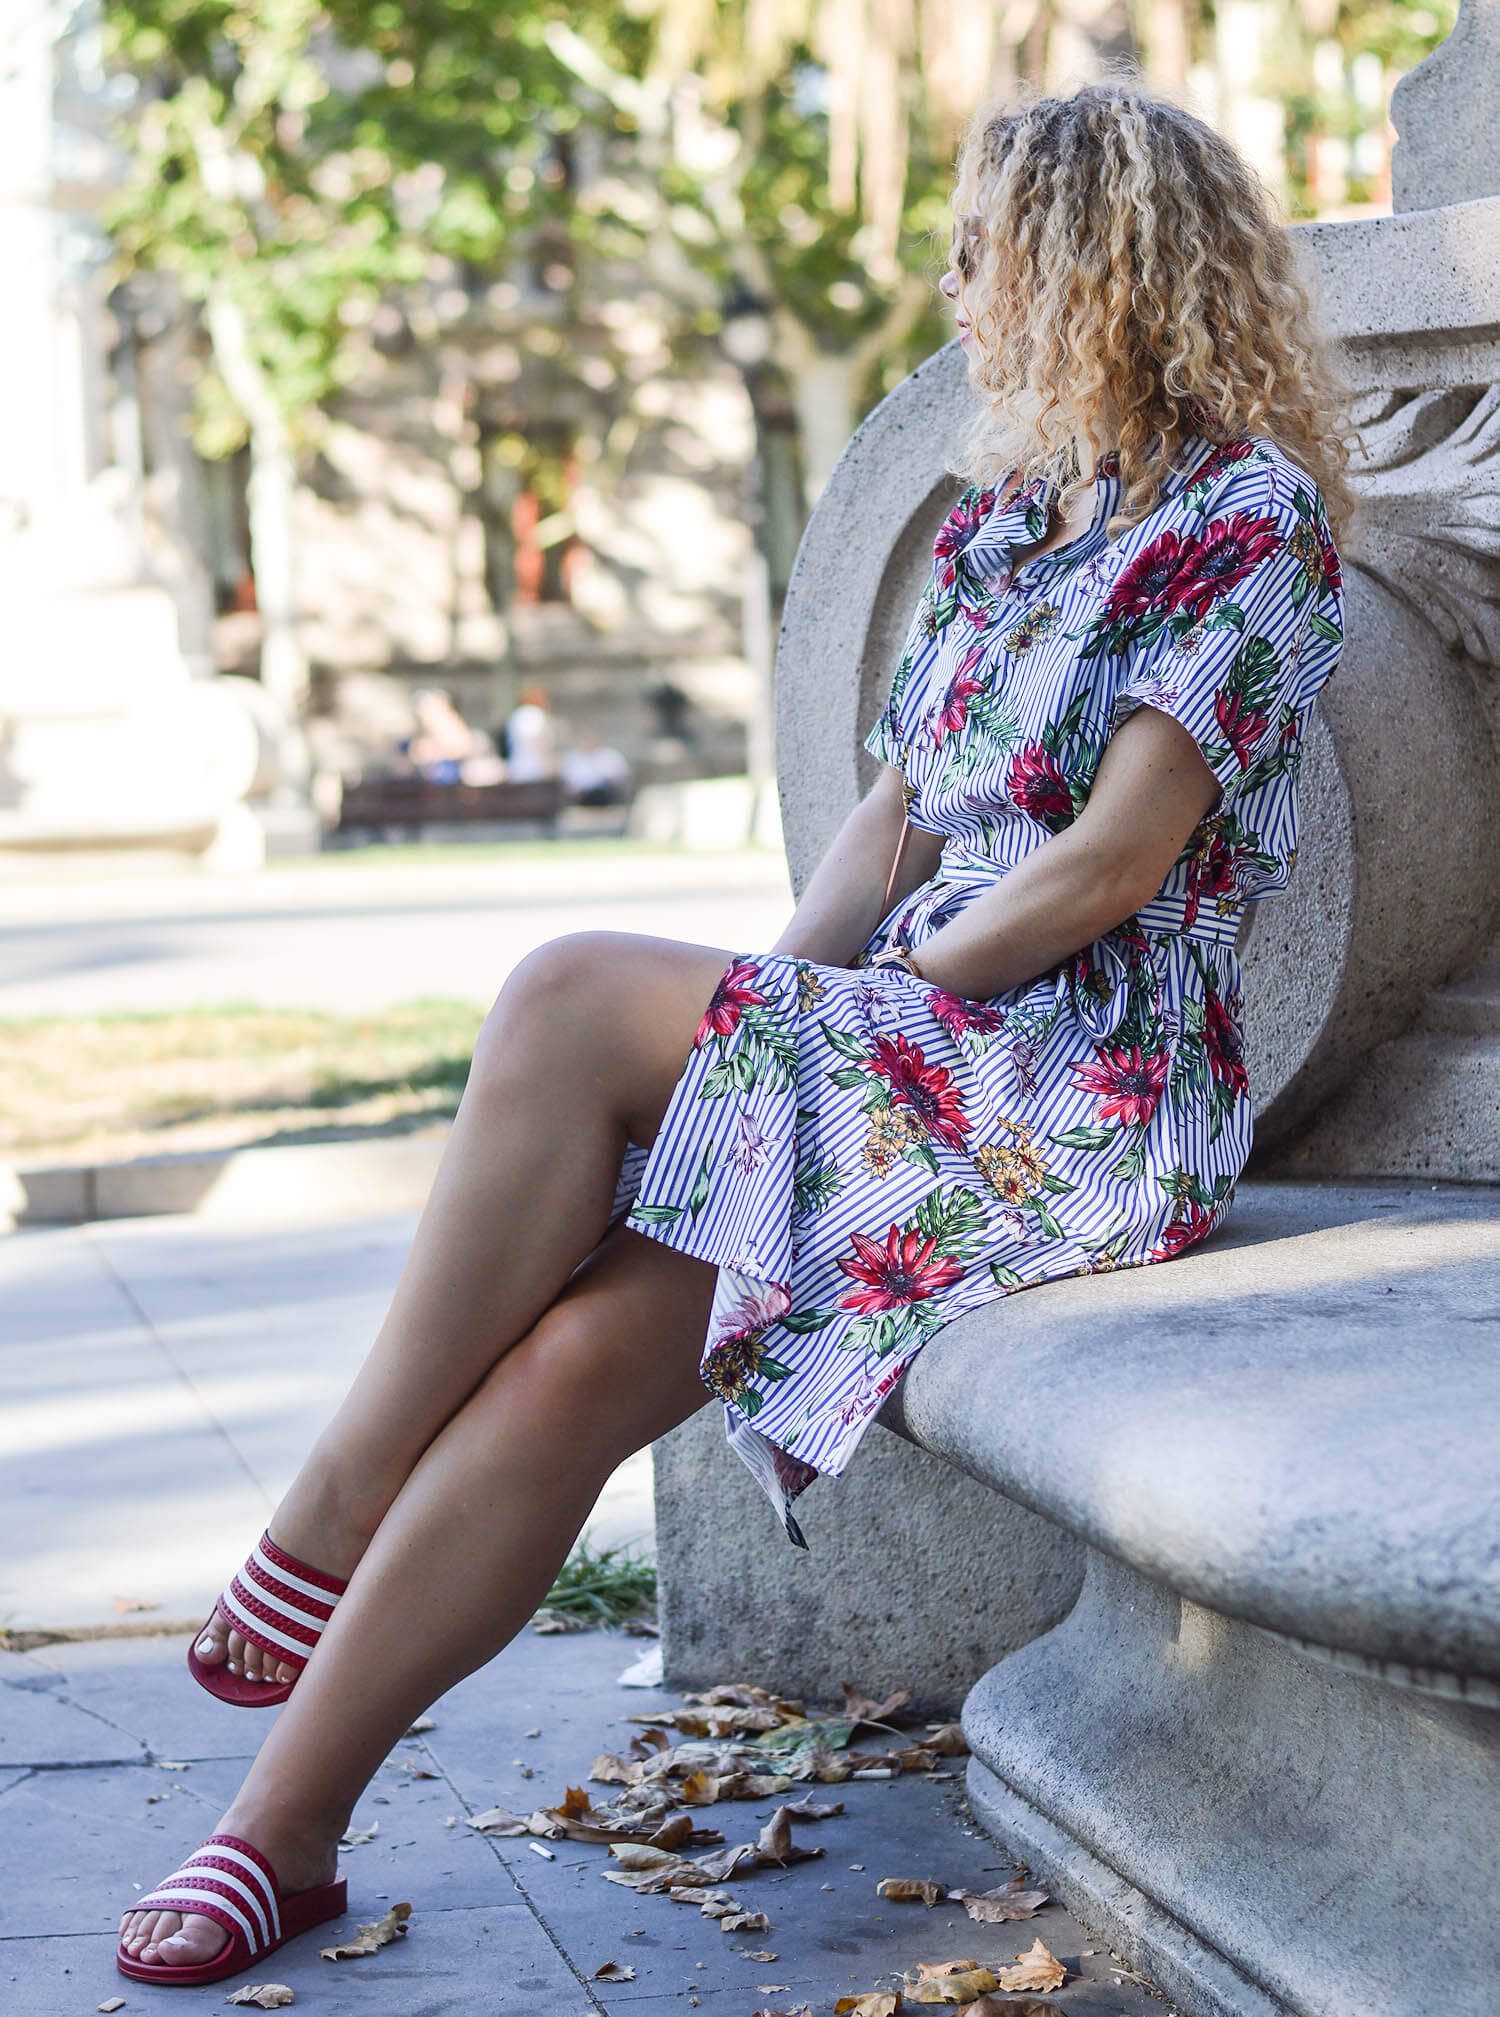 Outfit-Zara-Blouse-Dress-Furla-Bag-and-Adiletten-in-Barcelona-kationette-fashionblogger-travelblogger-honeymoon-2017